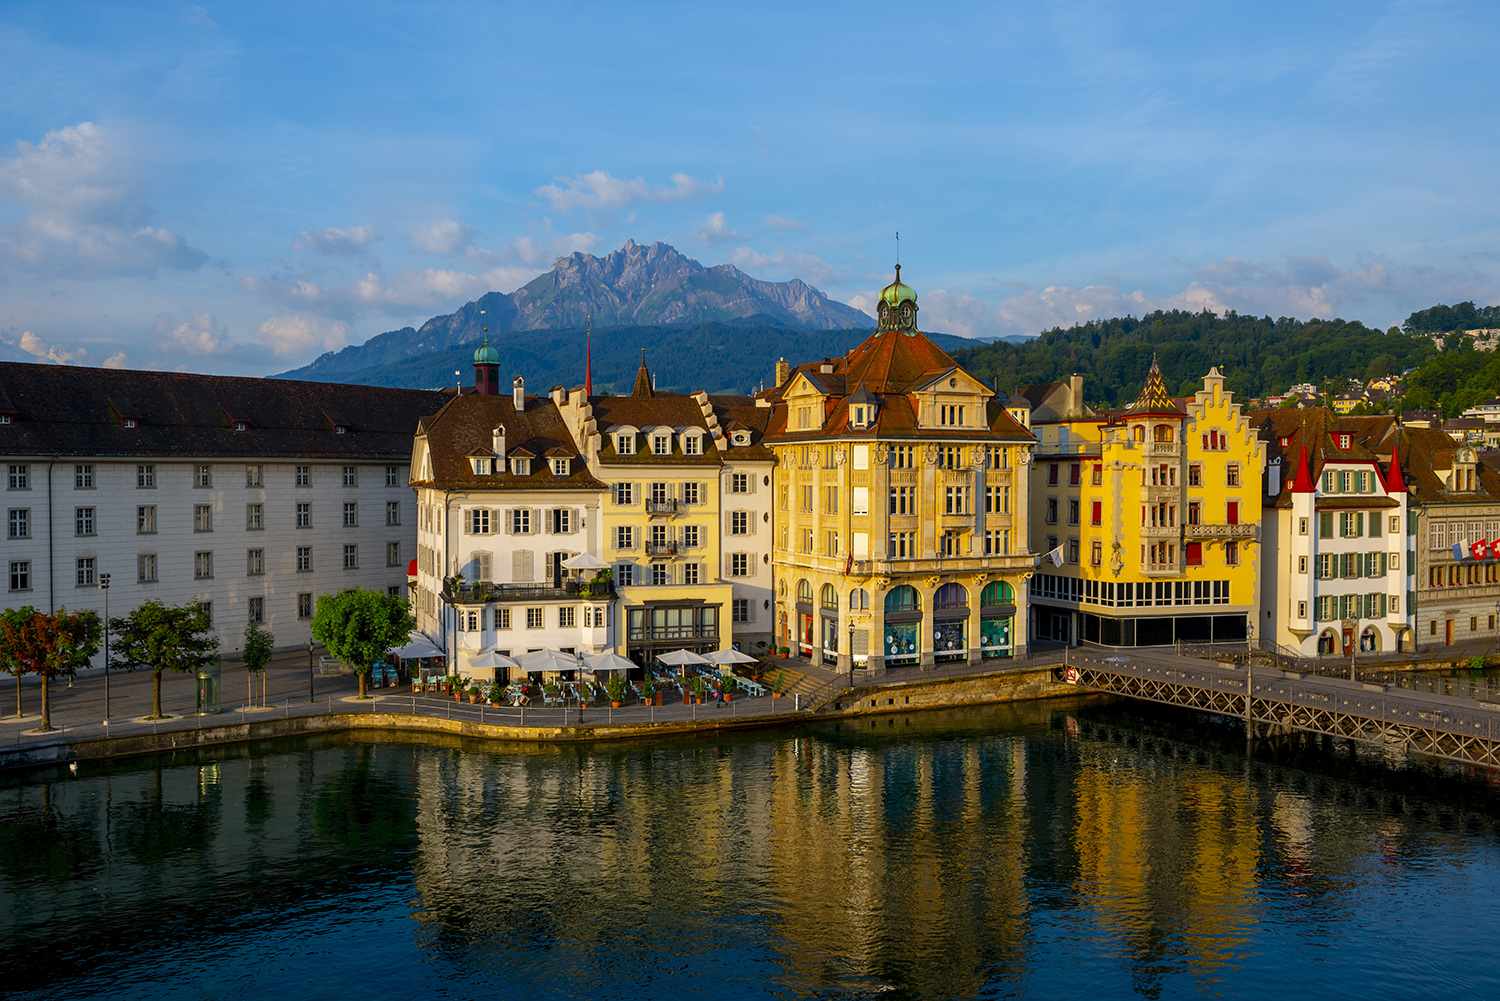 Lucerne is a popular city in Switzerland